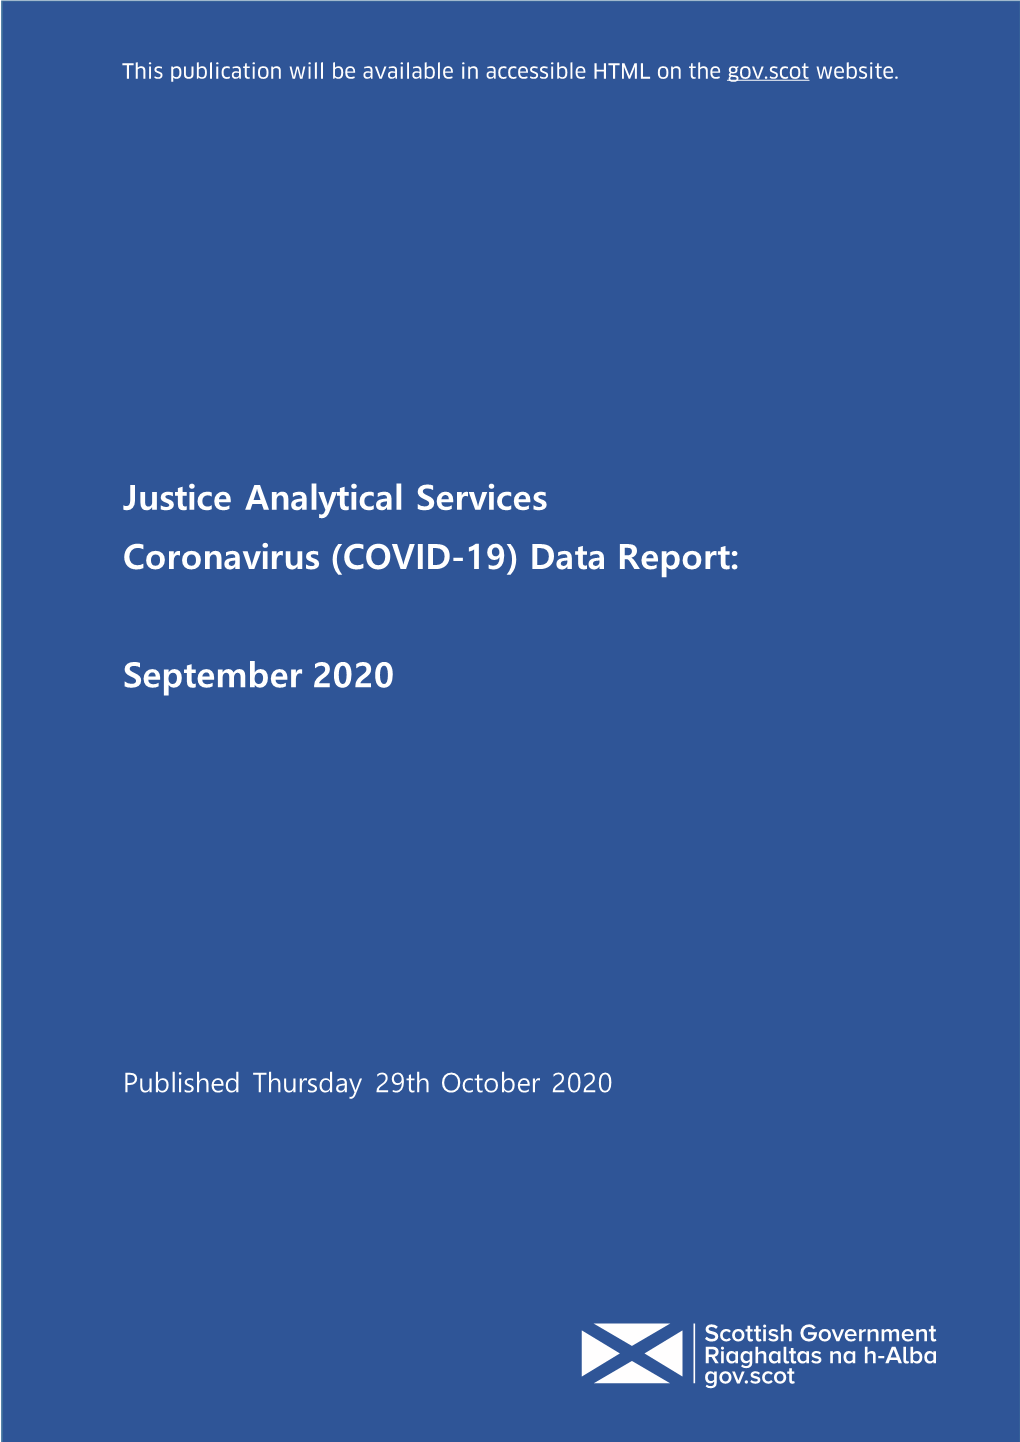 Justice Analytical Services: Coronavirus (COVID-19) Data